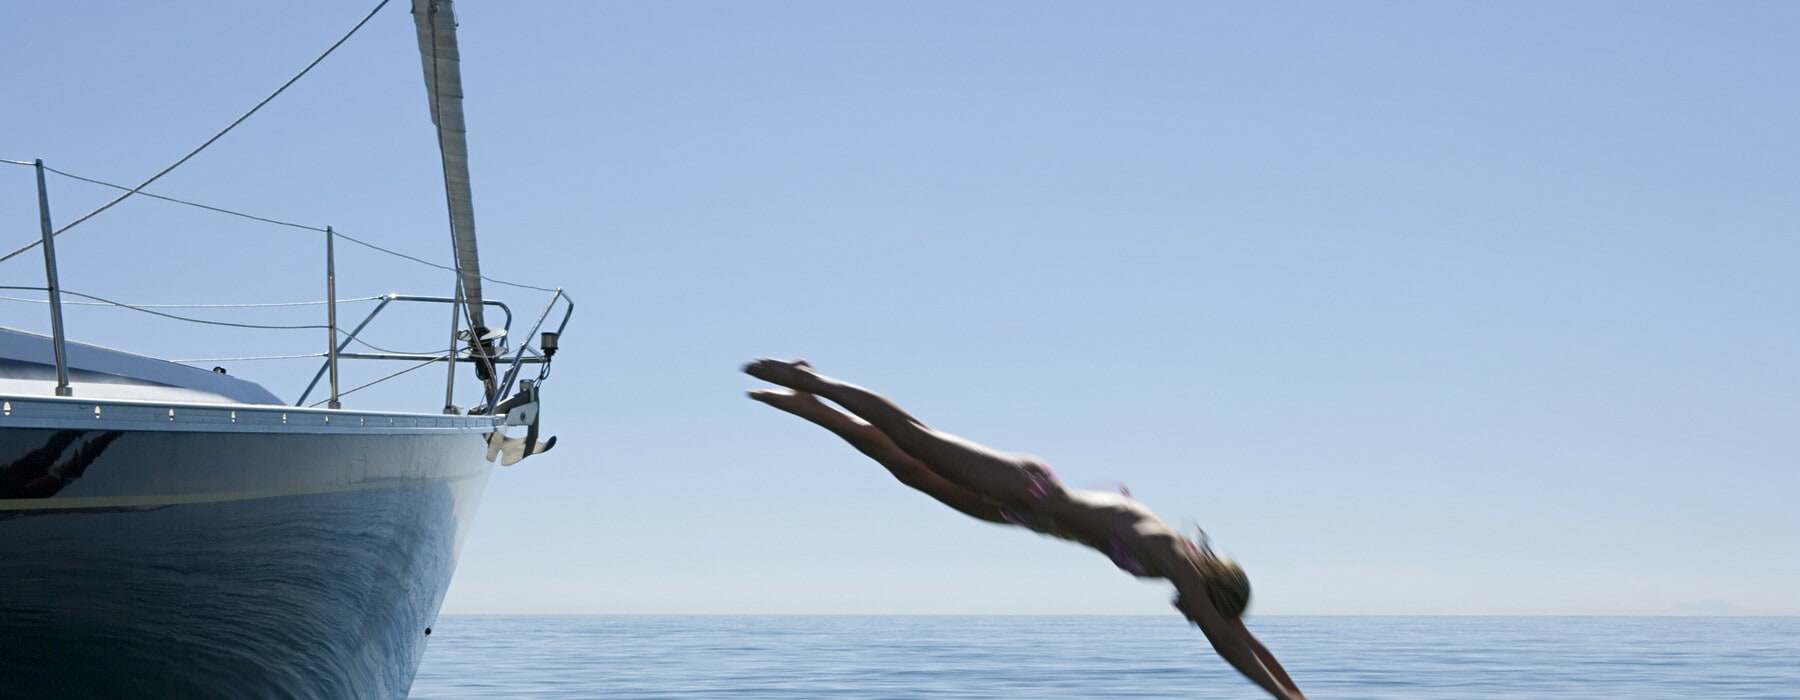 Woman diving into ocean